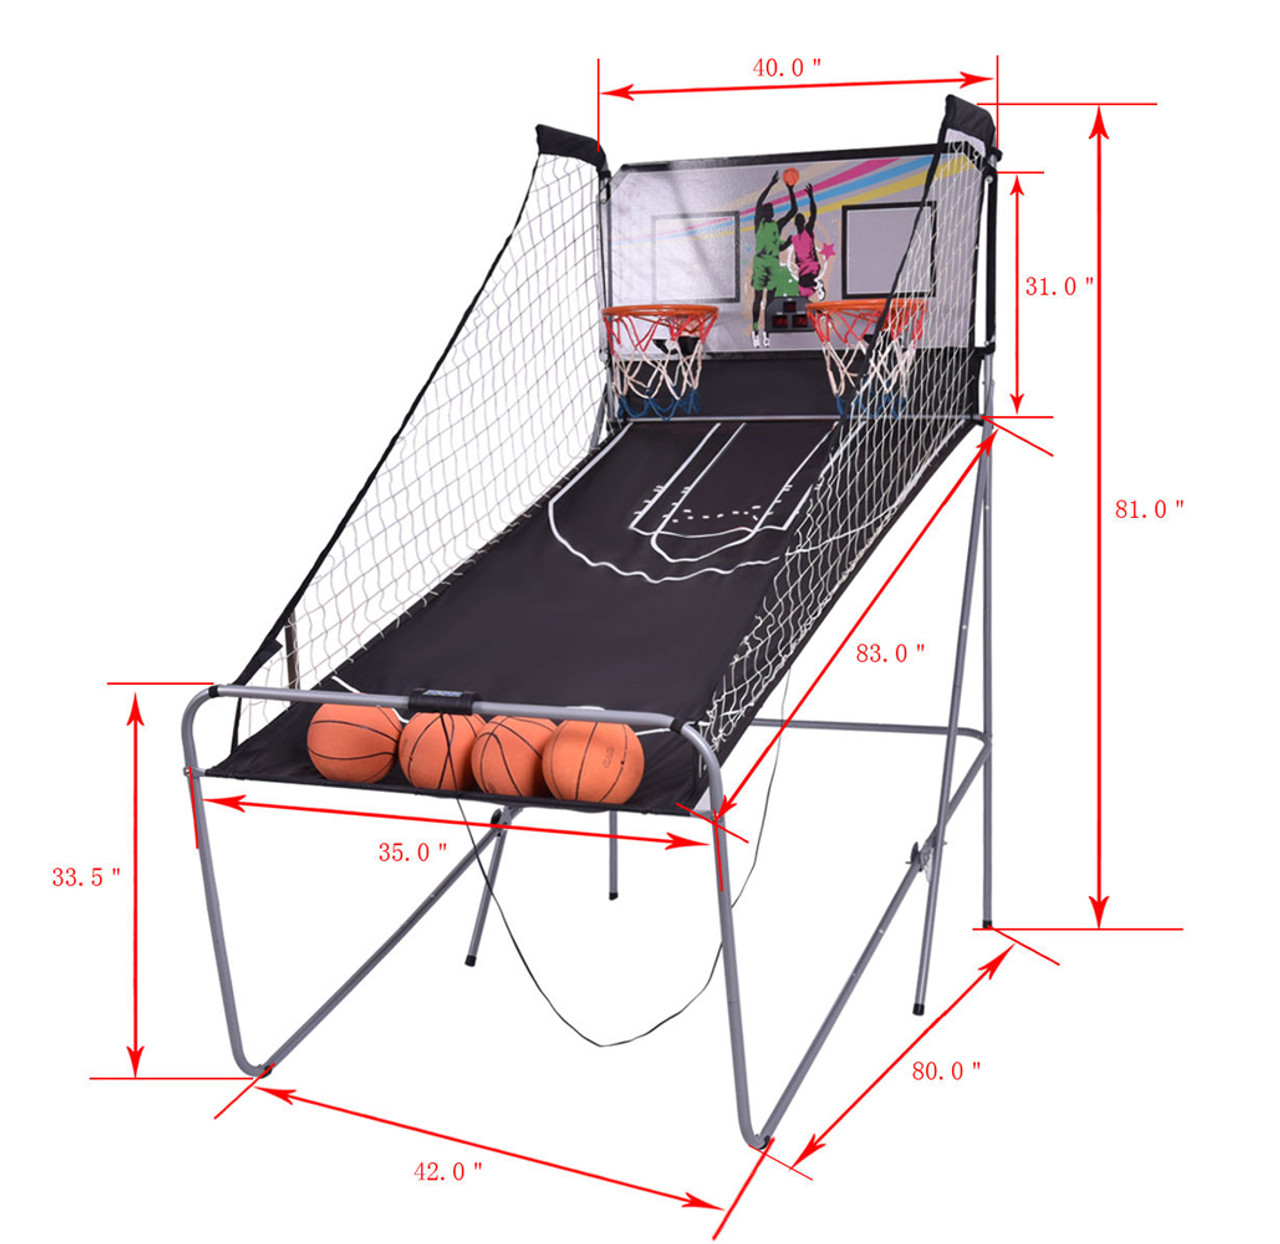 Indoor Electronic Basketball Arcade Game product image